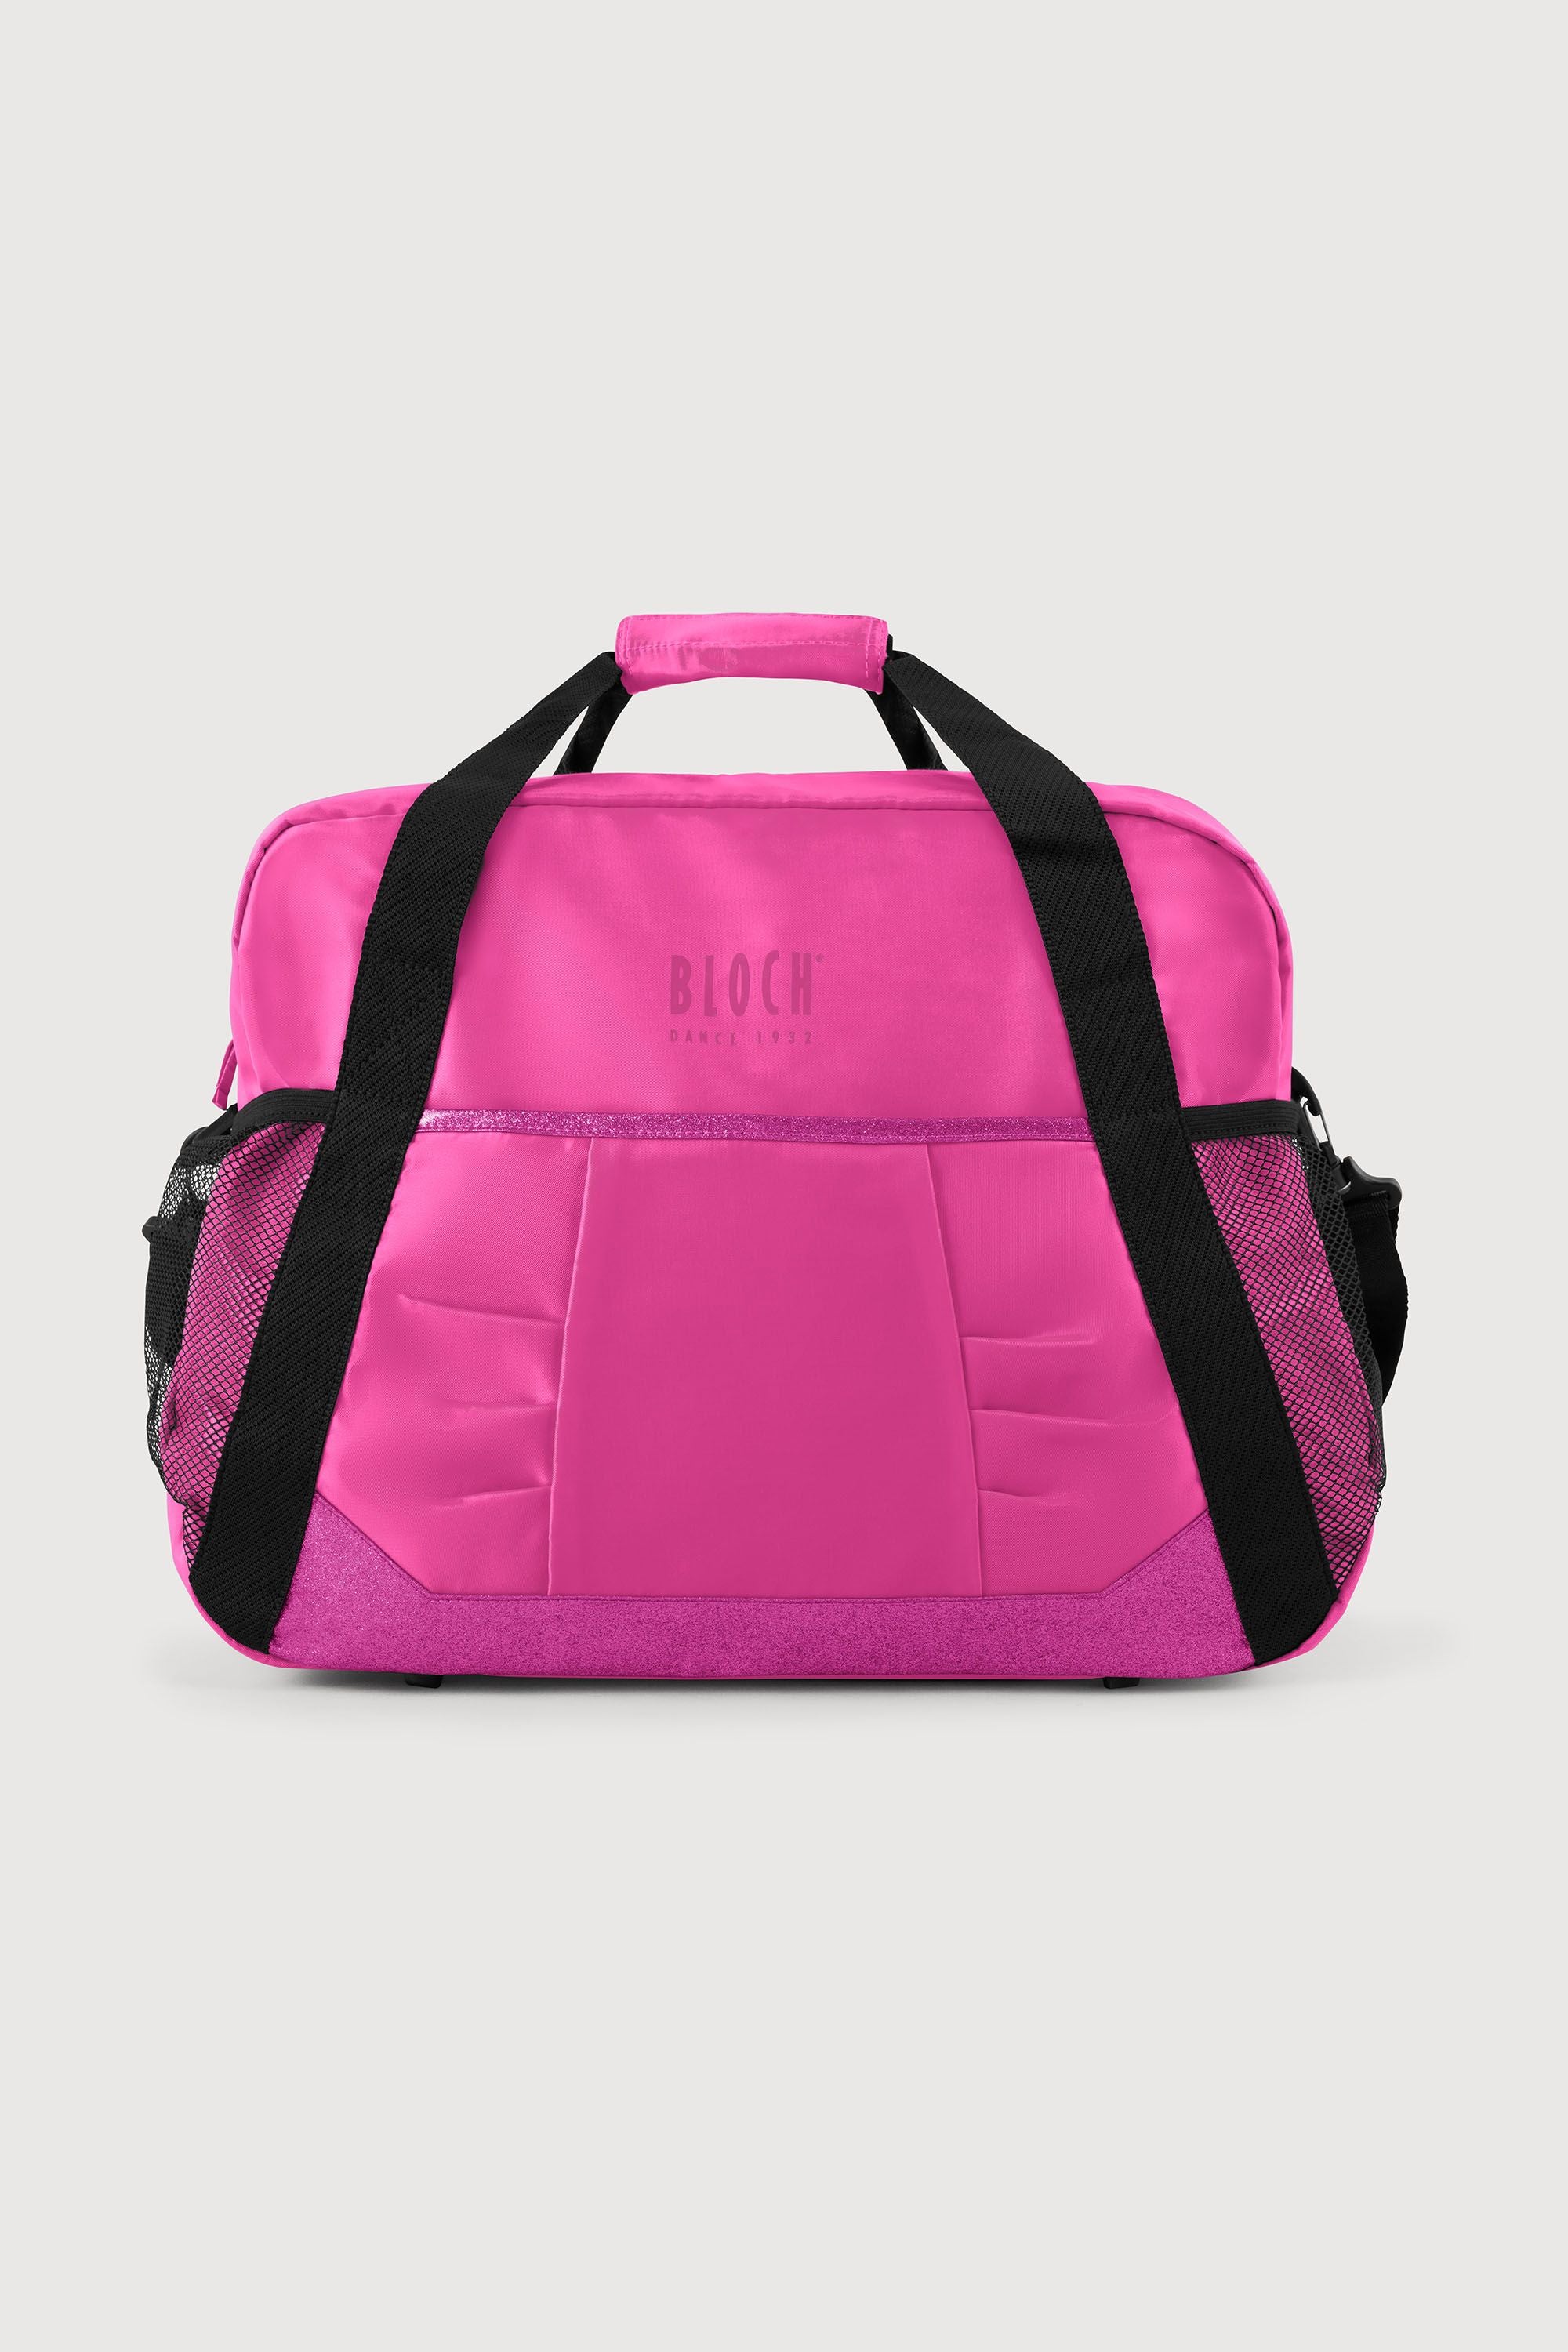 Bloch Recital Dance Bag, Hot Pink Nylon